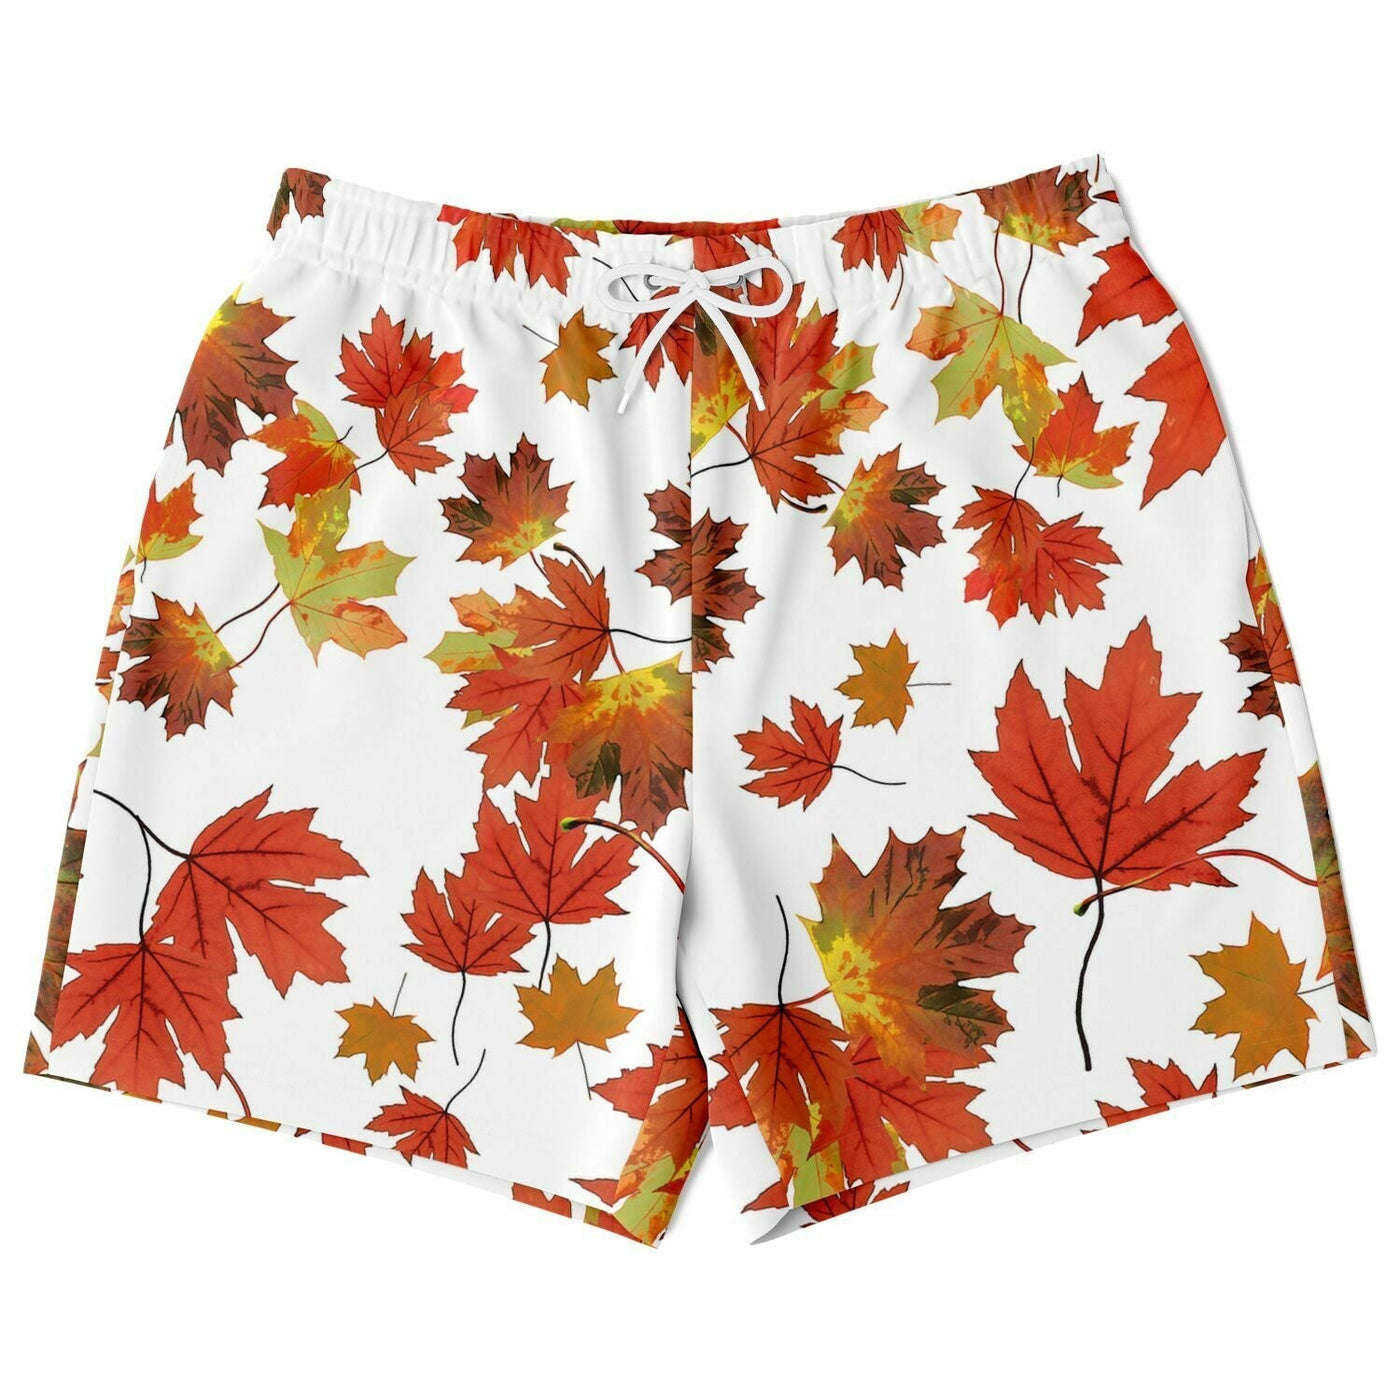 Tyler Durden Maple Leaf Pattern Shorts - Fight Club | Fashion Shorts